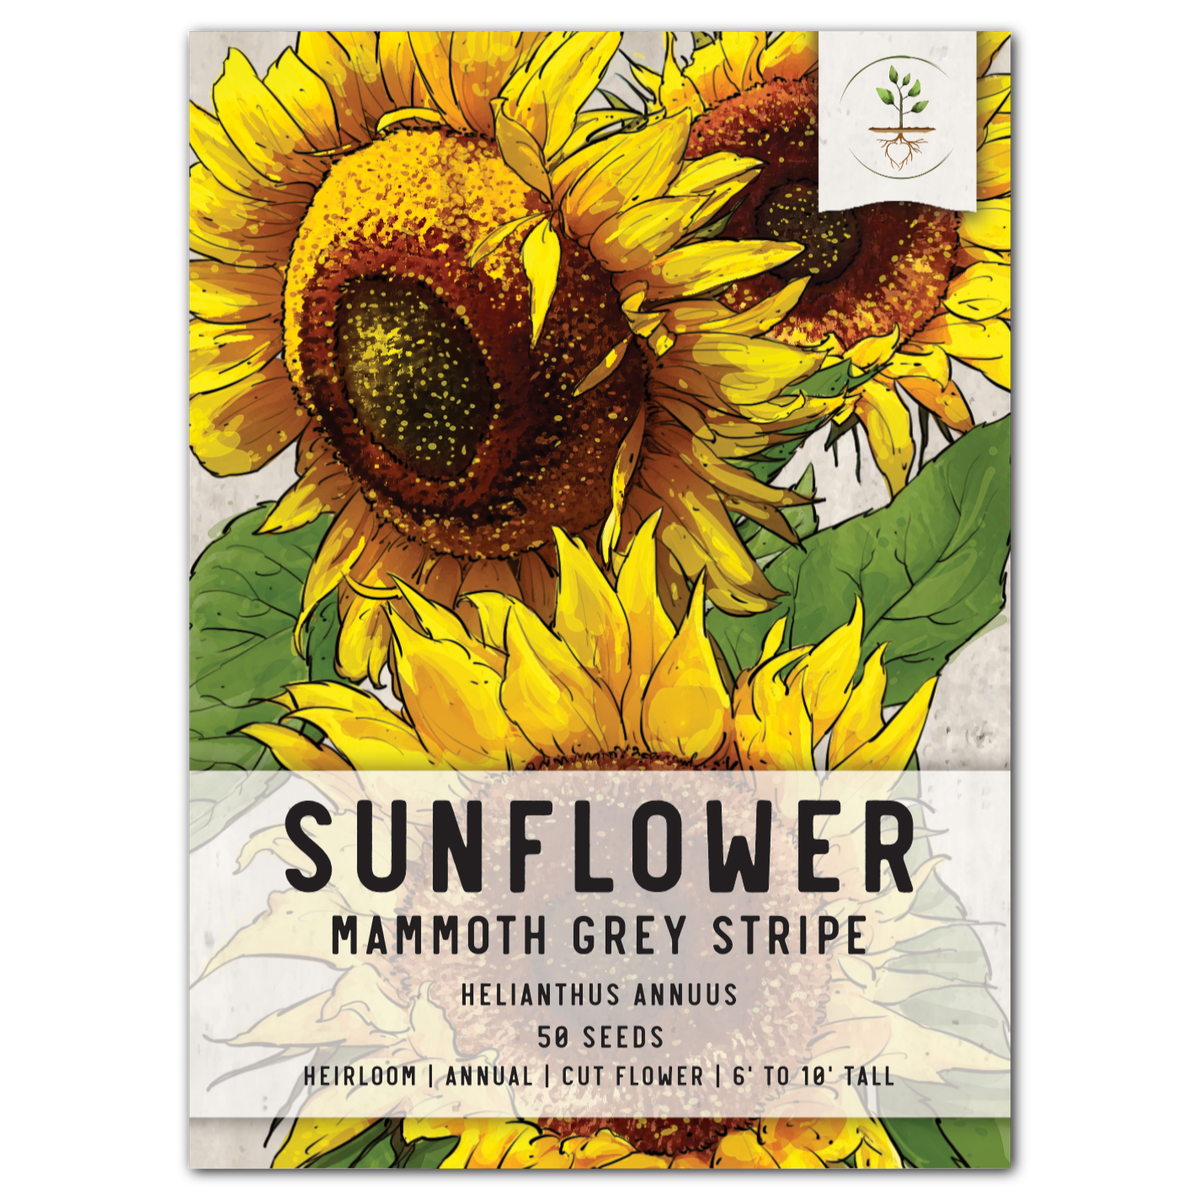 52 Graines Helianthus annuus Giant sunflower Sunflower Mammoth Grey Stripe seed 